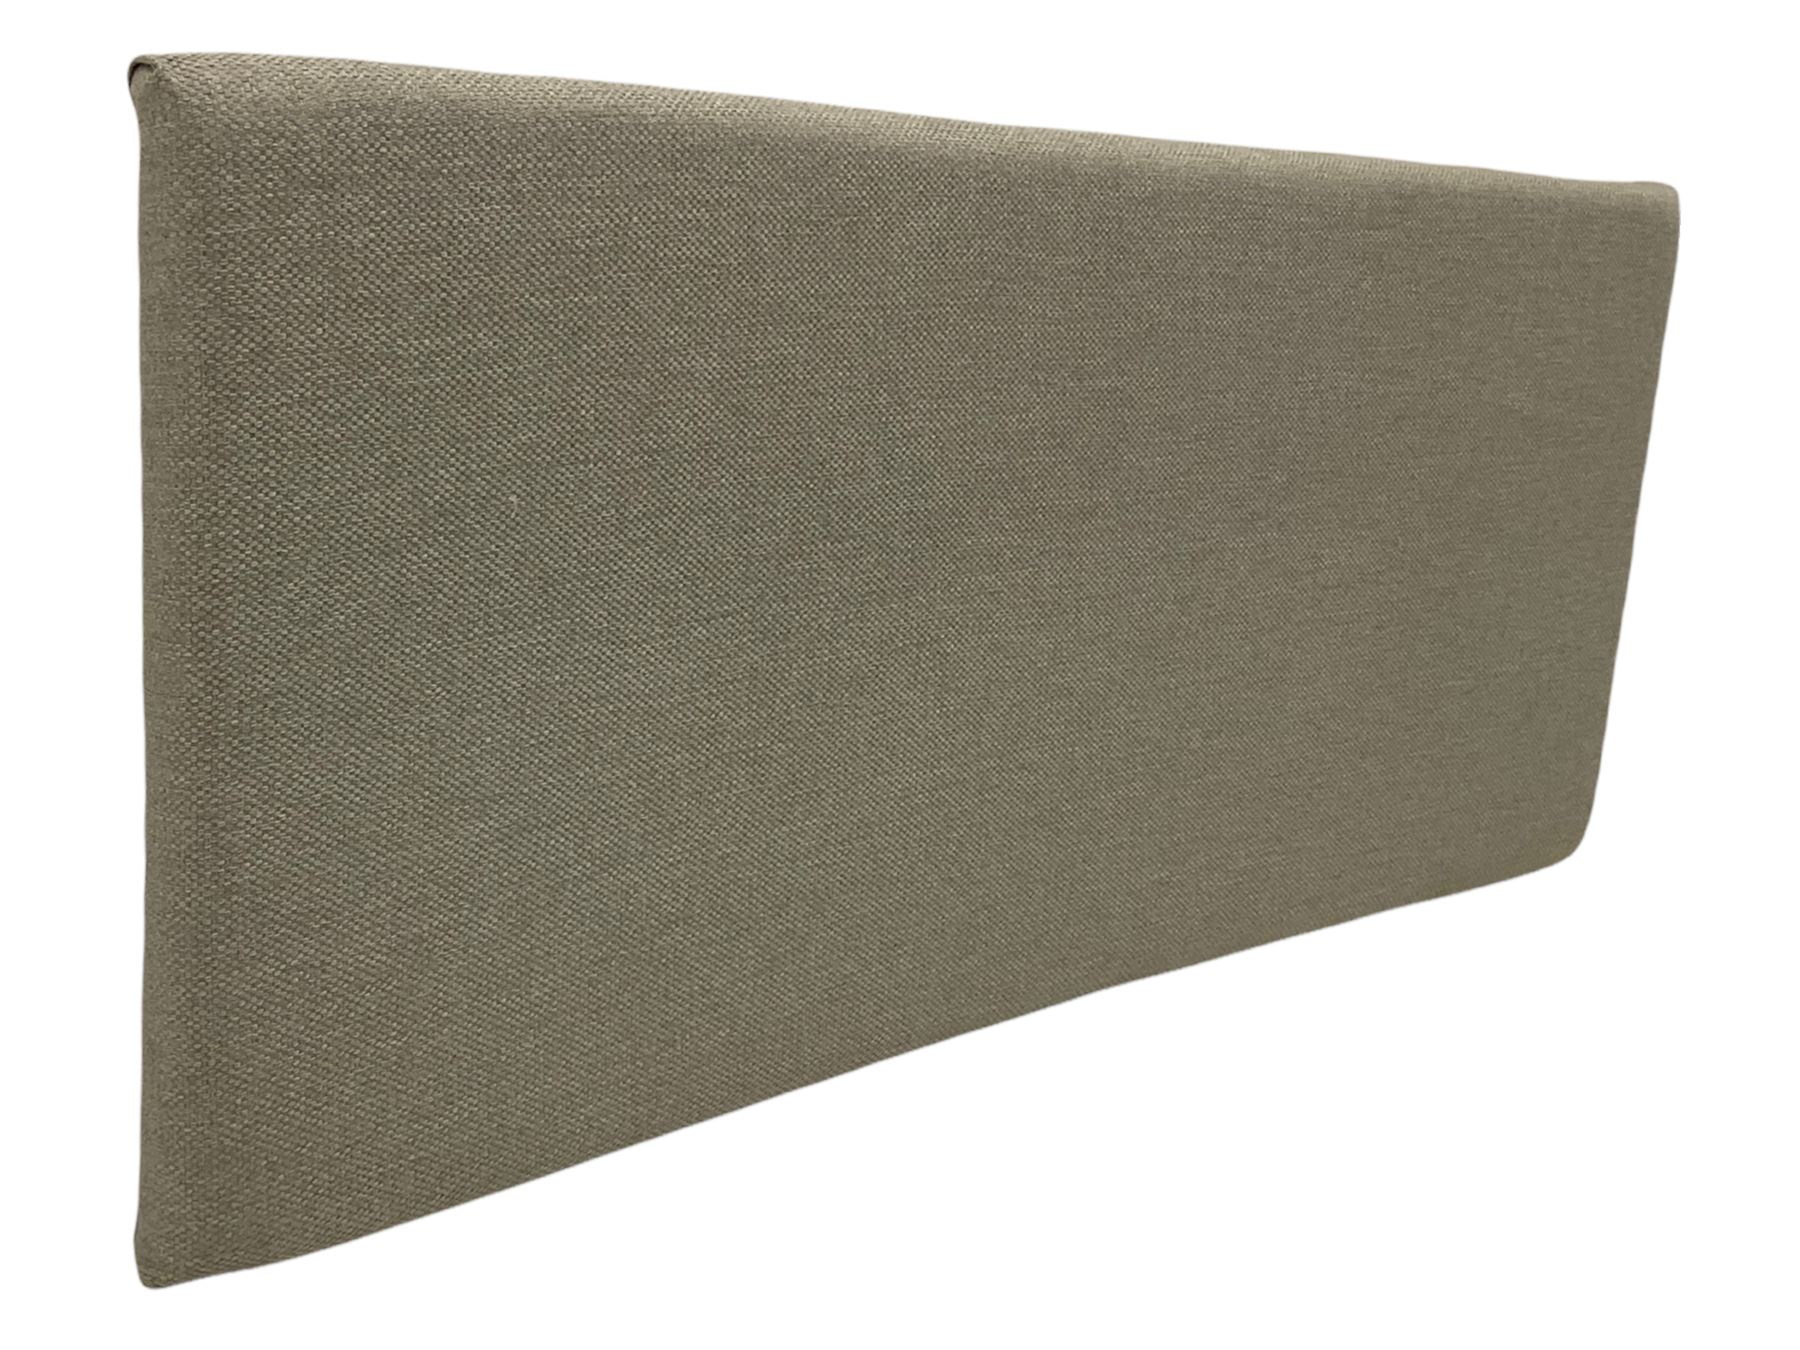 SuperKing 6' headboard upholstered in Warwick moon grey fabric - Image 3 of 5